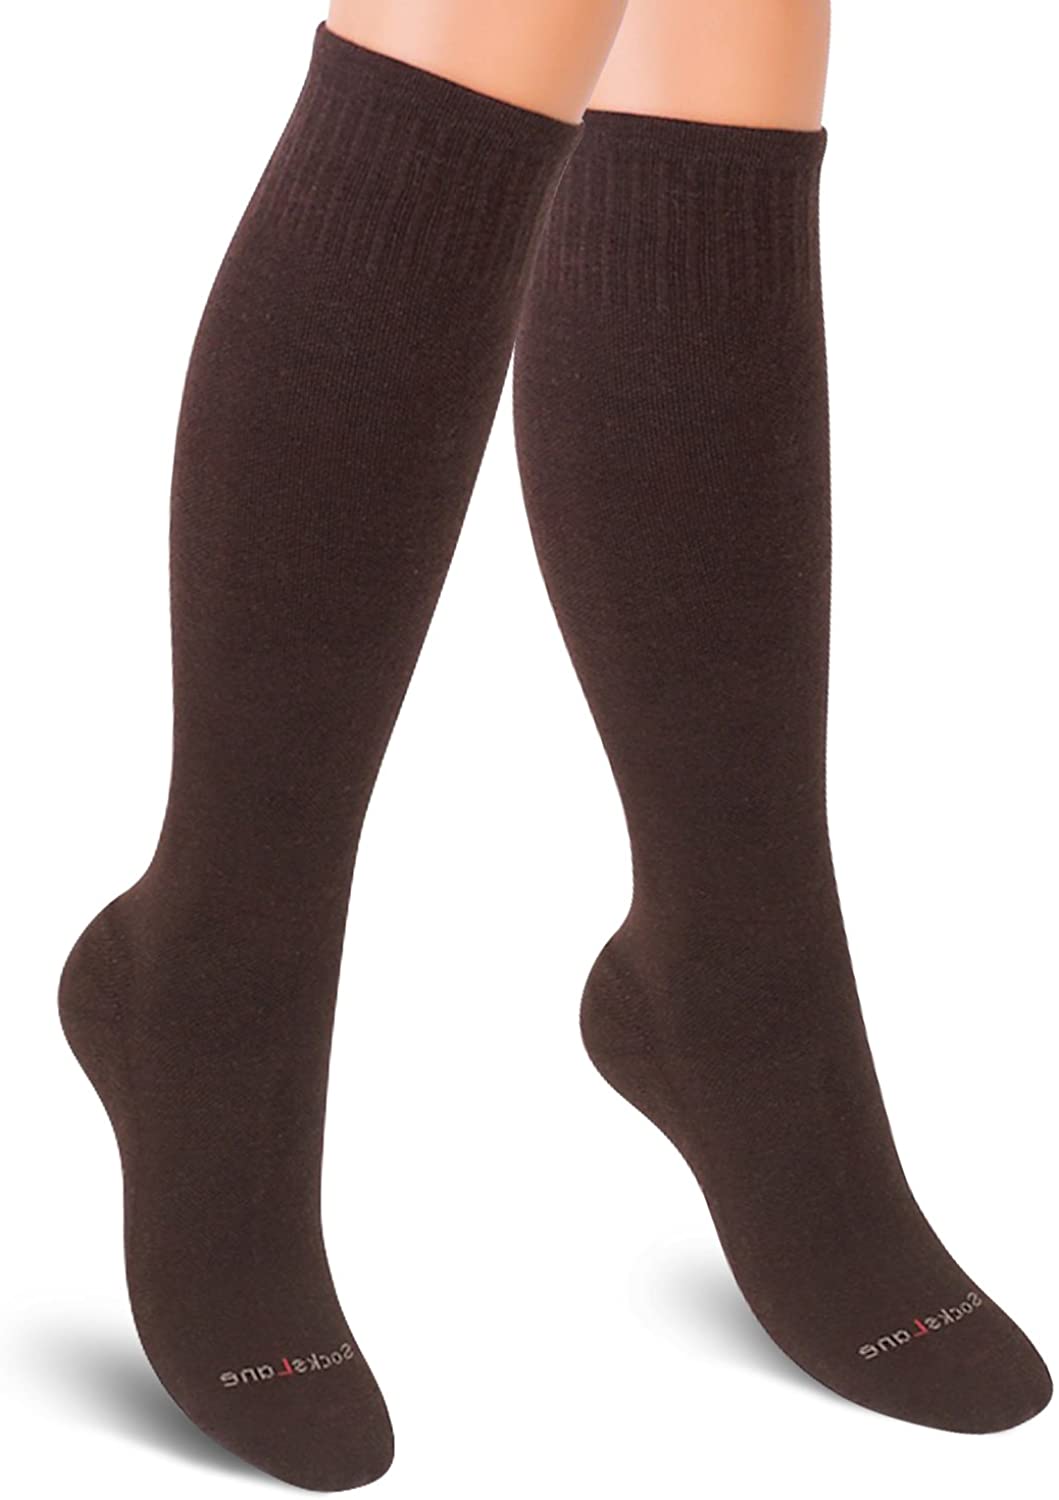 SocksLane Cotton Compression Socks for Women & Men 15-20 mmHg Support Knee-High 